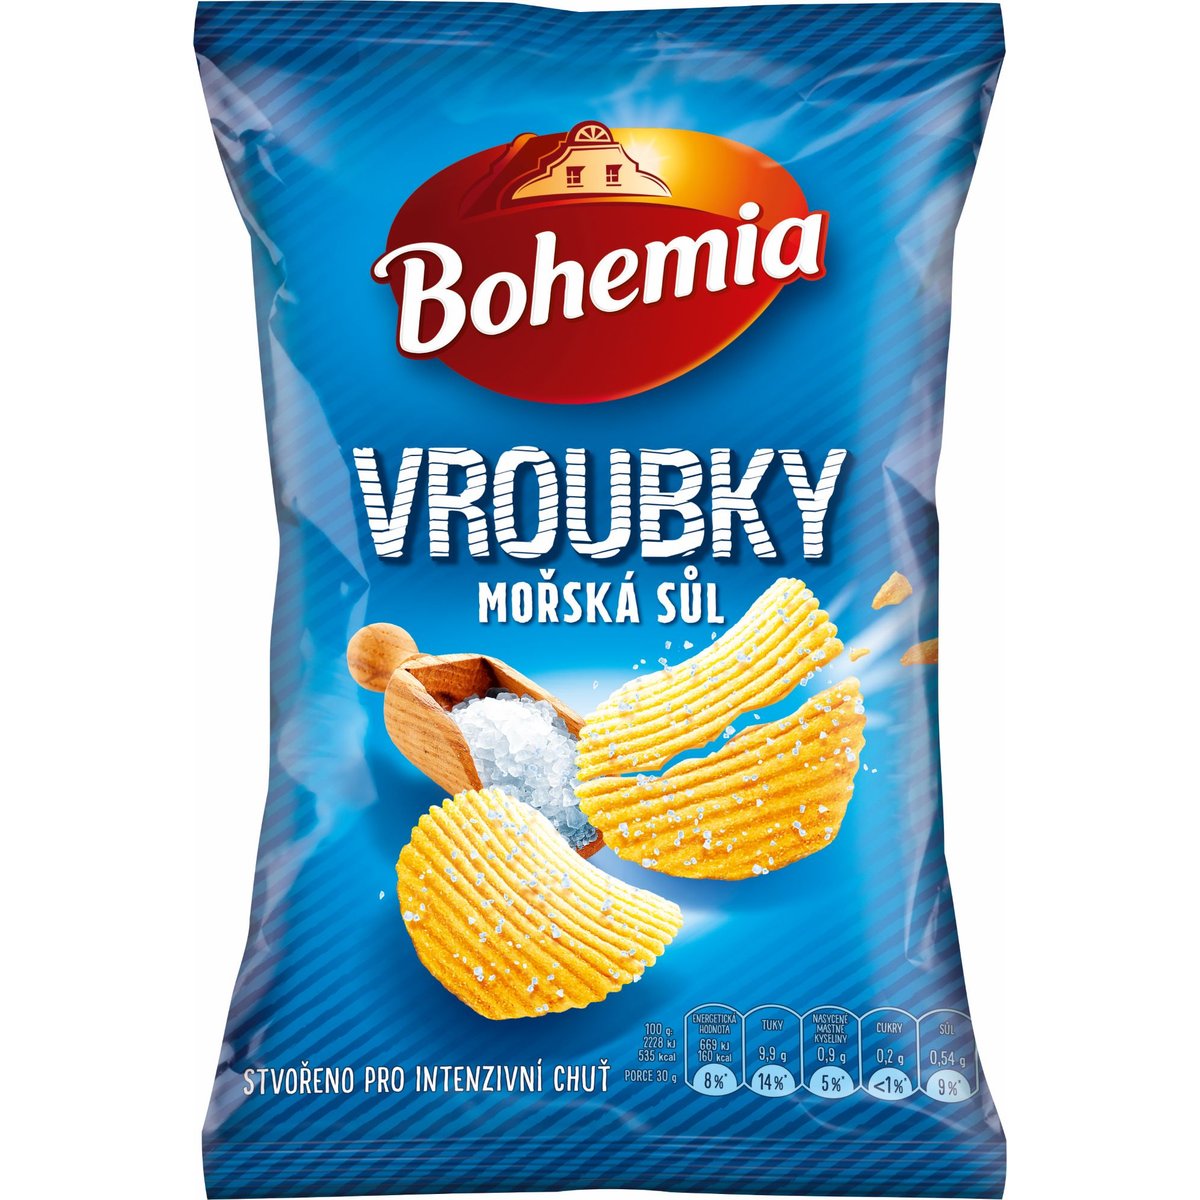 Bohemia Vroubky Mořská sůl